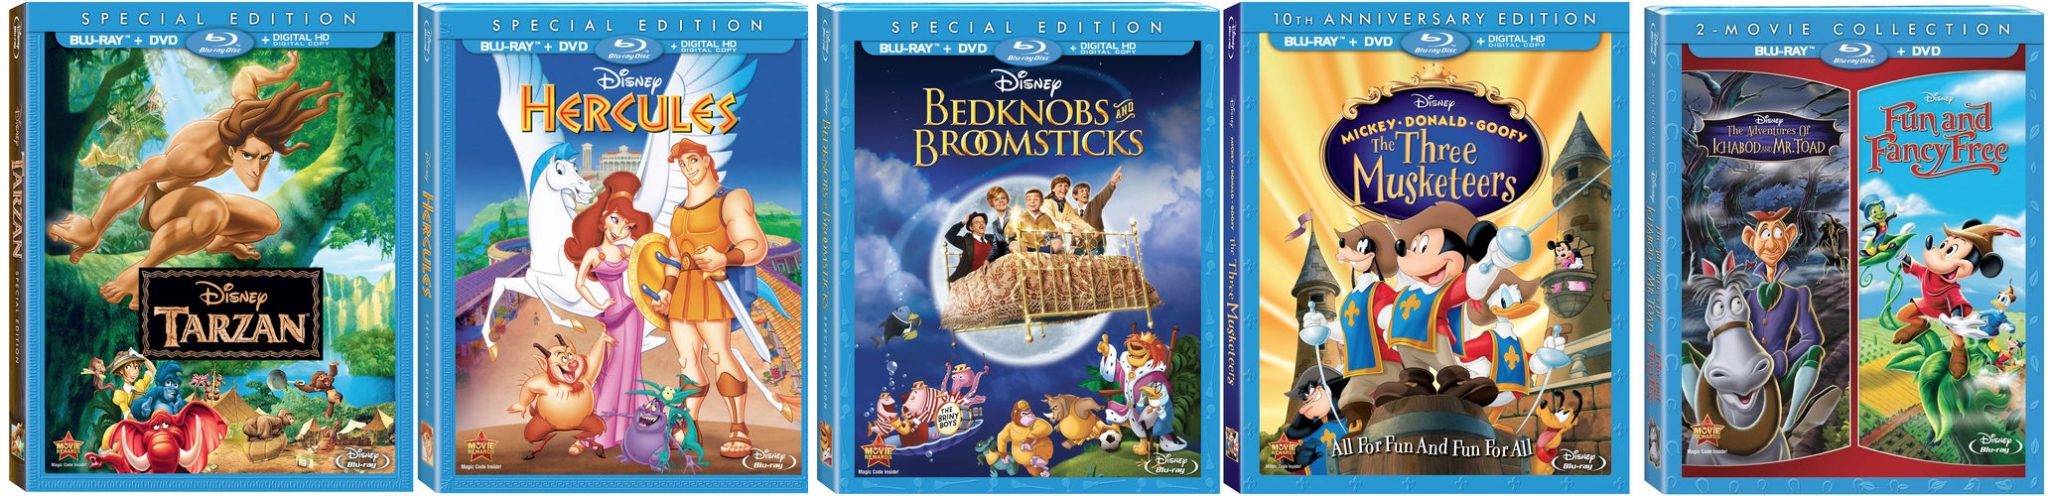 5 New Disney & Pixar Classics Available on Blu-ray Today - Rotoscopers